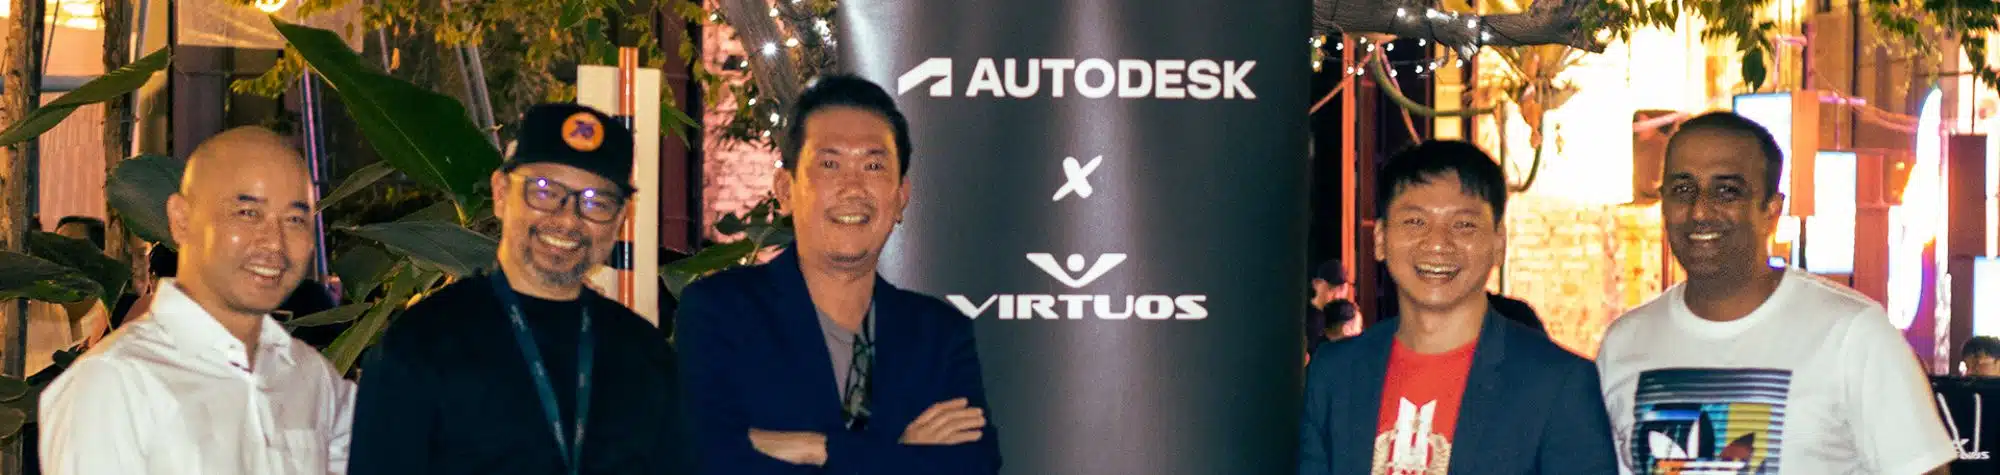 Autodesk x Virtuos 3D Community Night: Sparking creativity in Kuala Lumpur